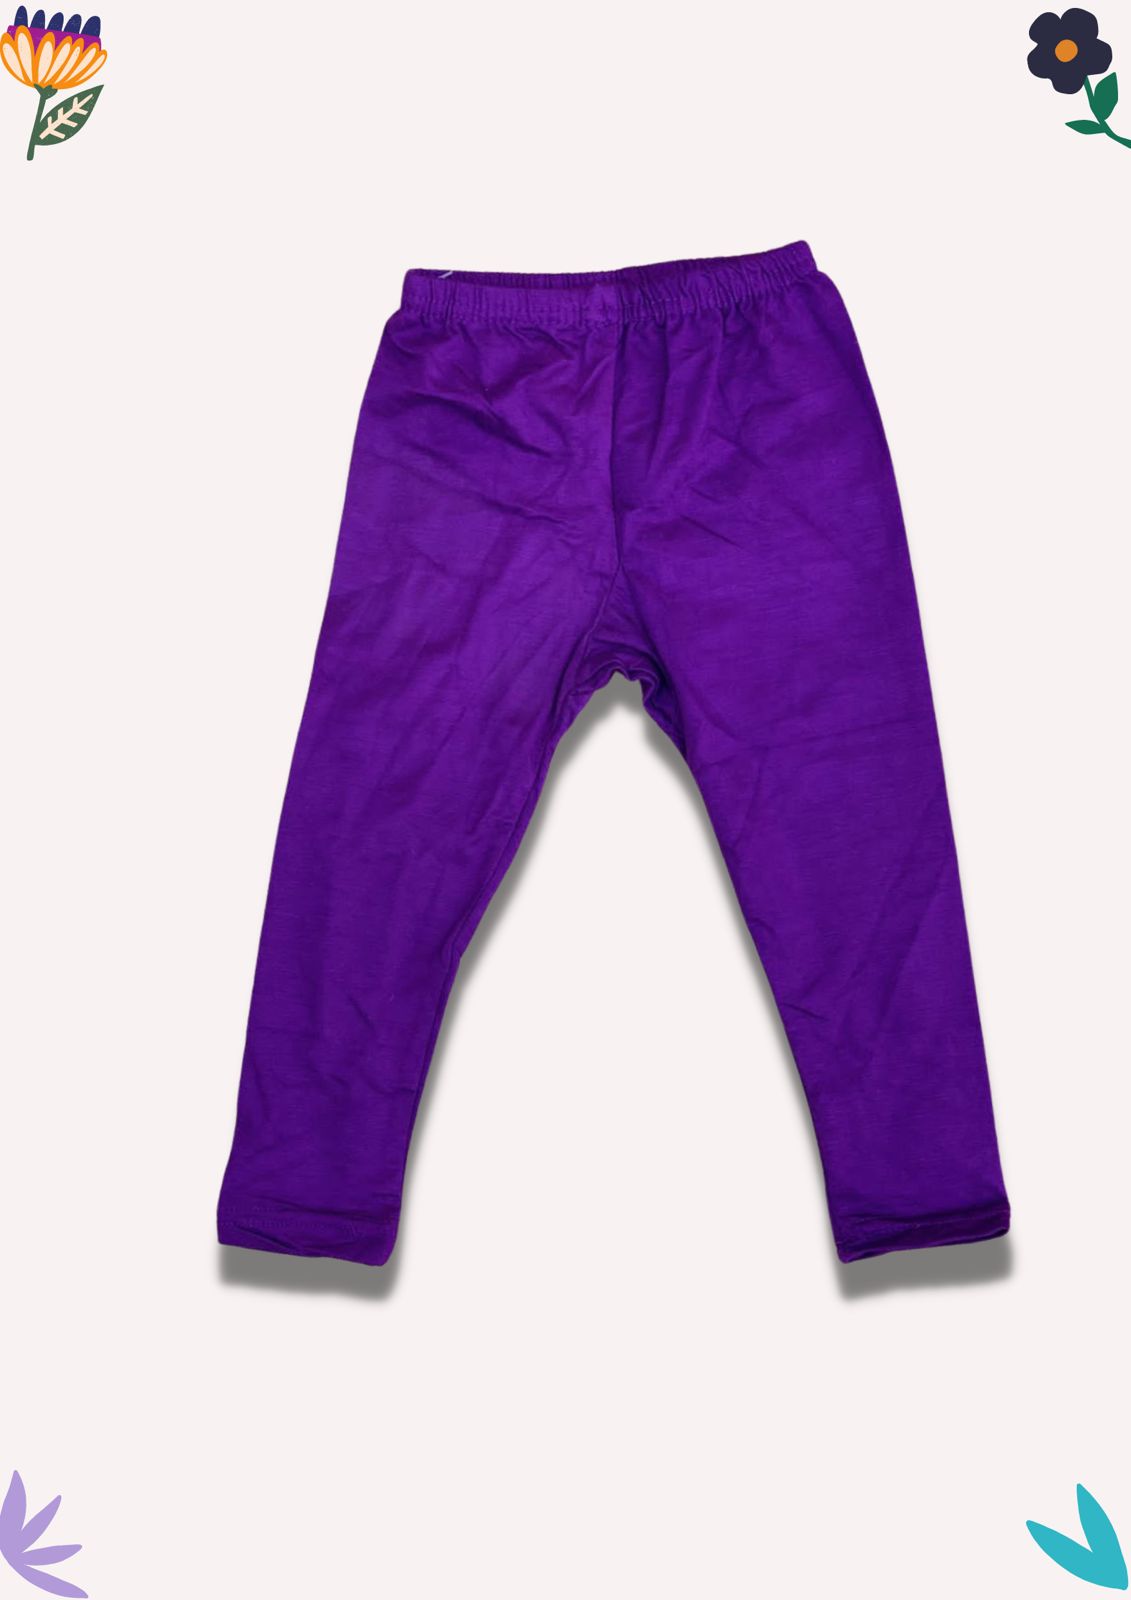 Purple tight